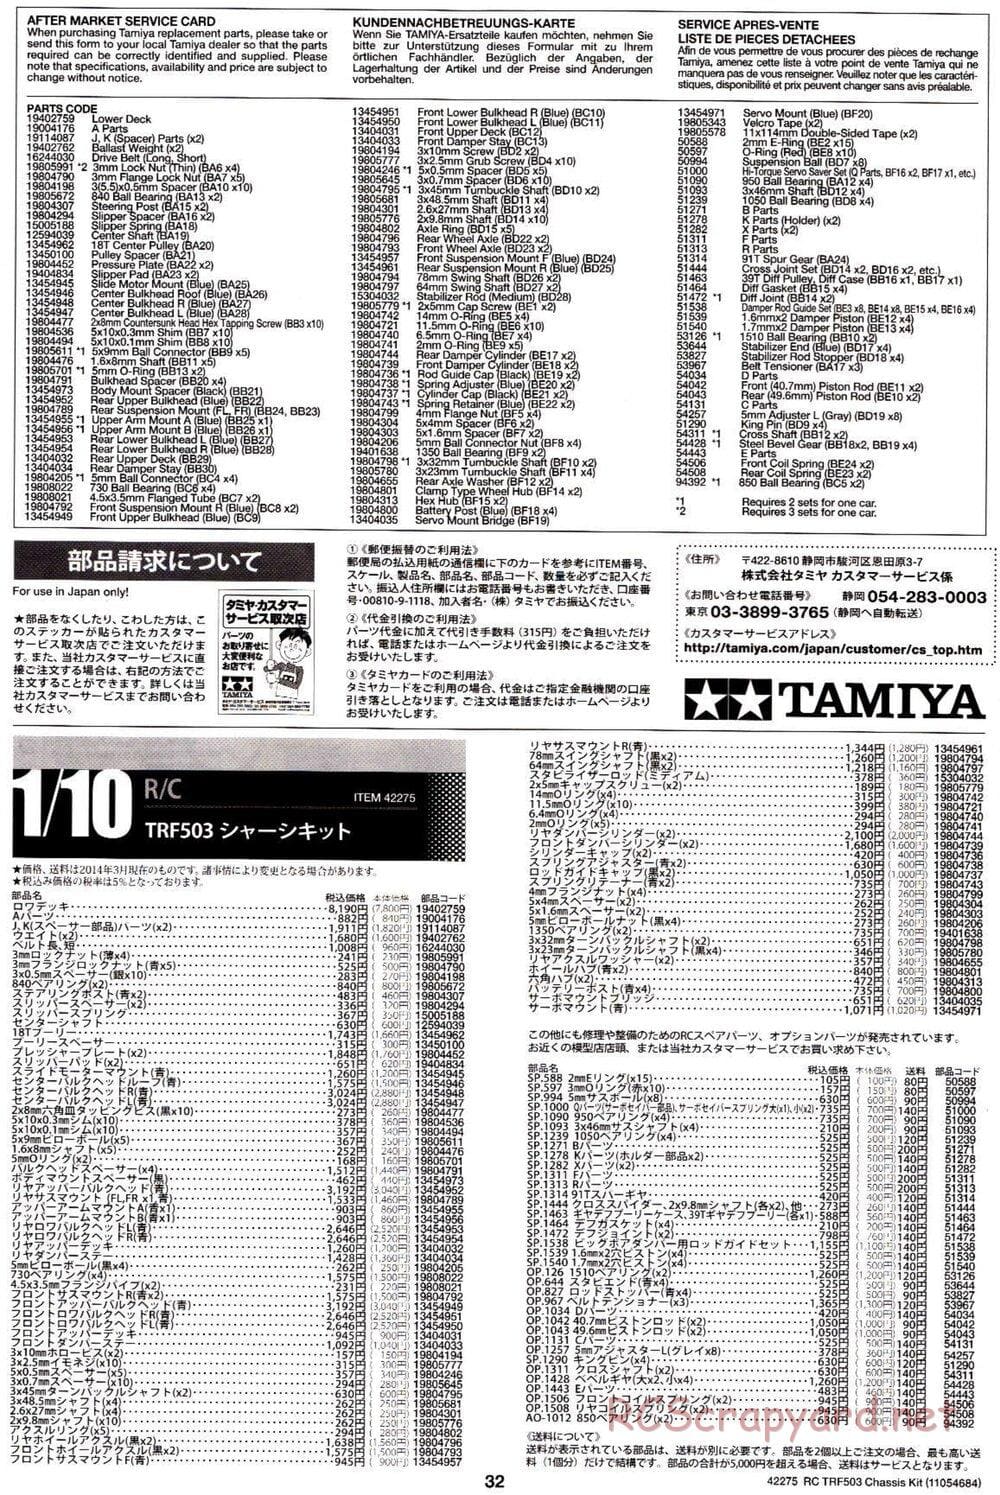 Tamiya - TRF503 Chassis - Manual - Page 32